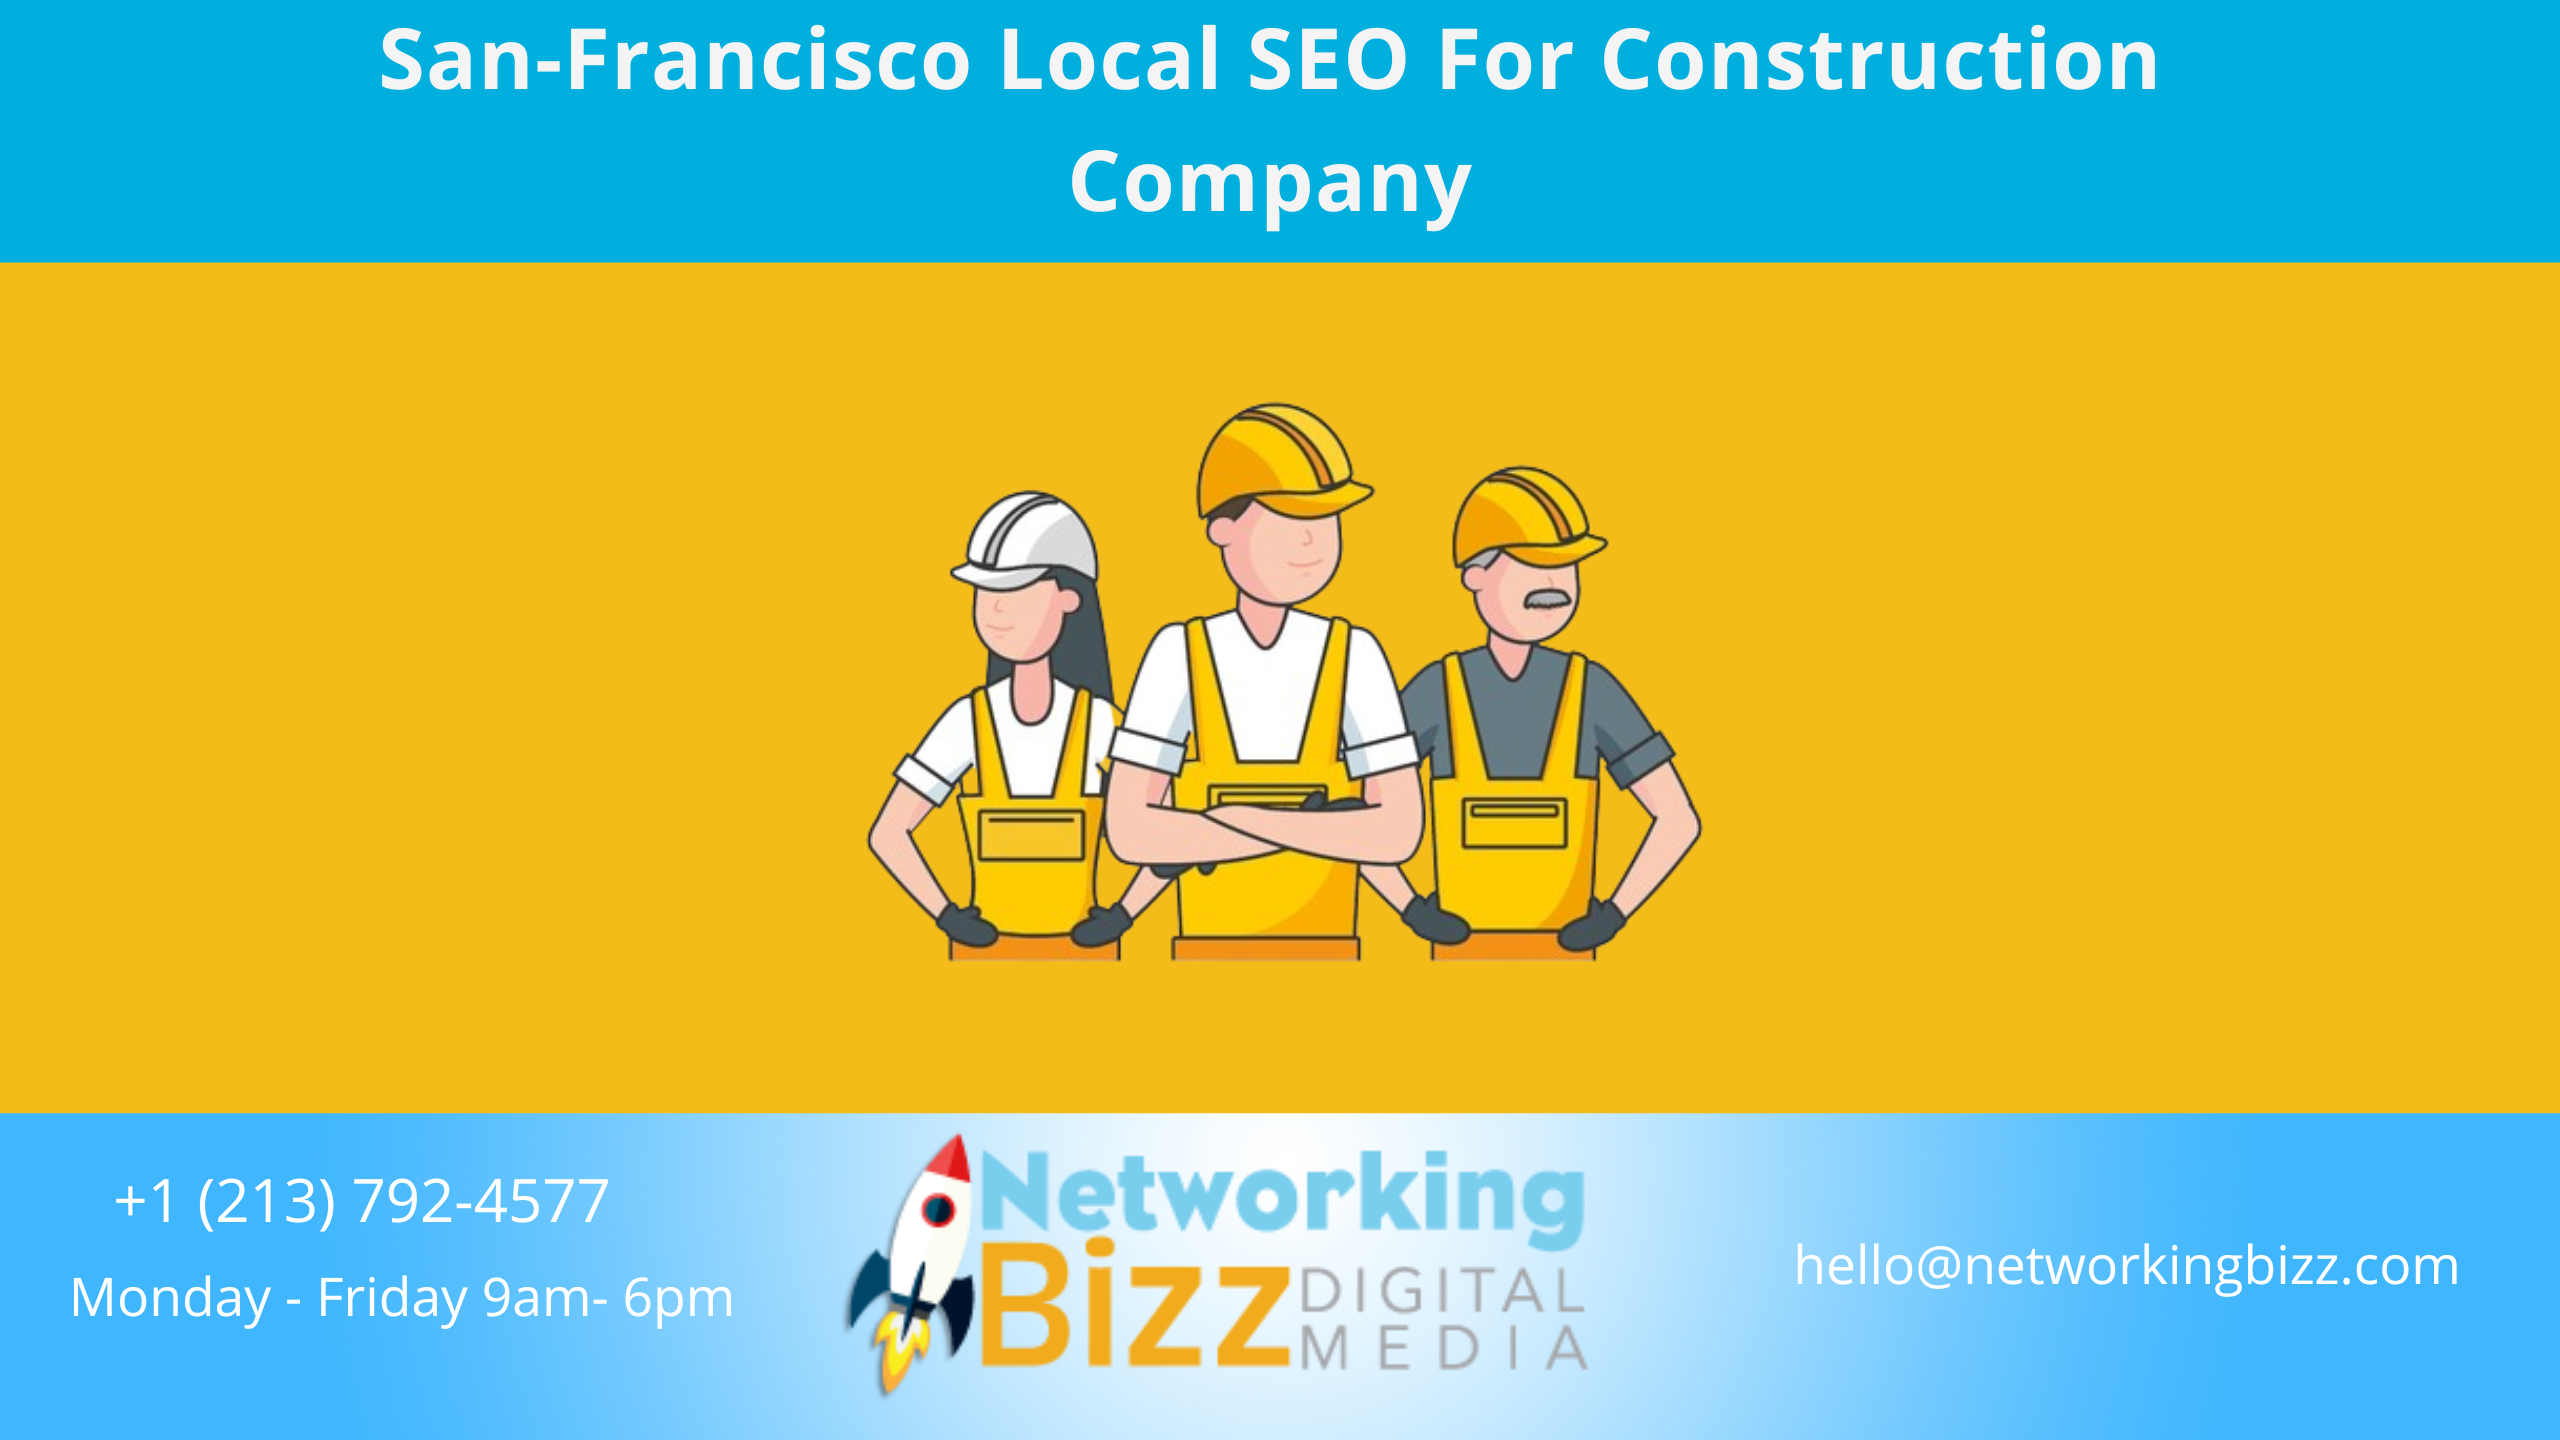 San-Francisco Local SEO For Construction Company